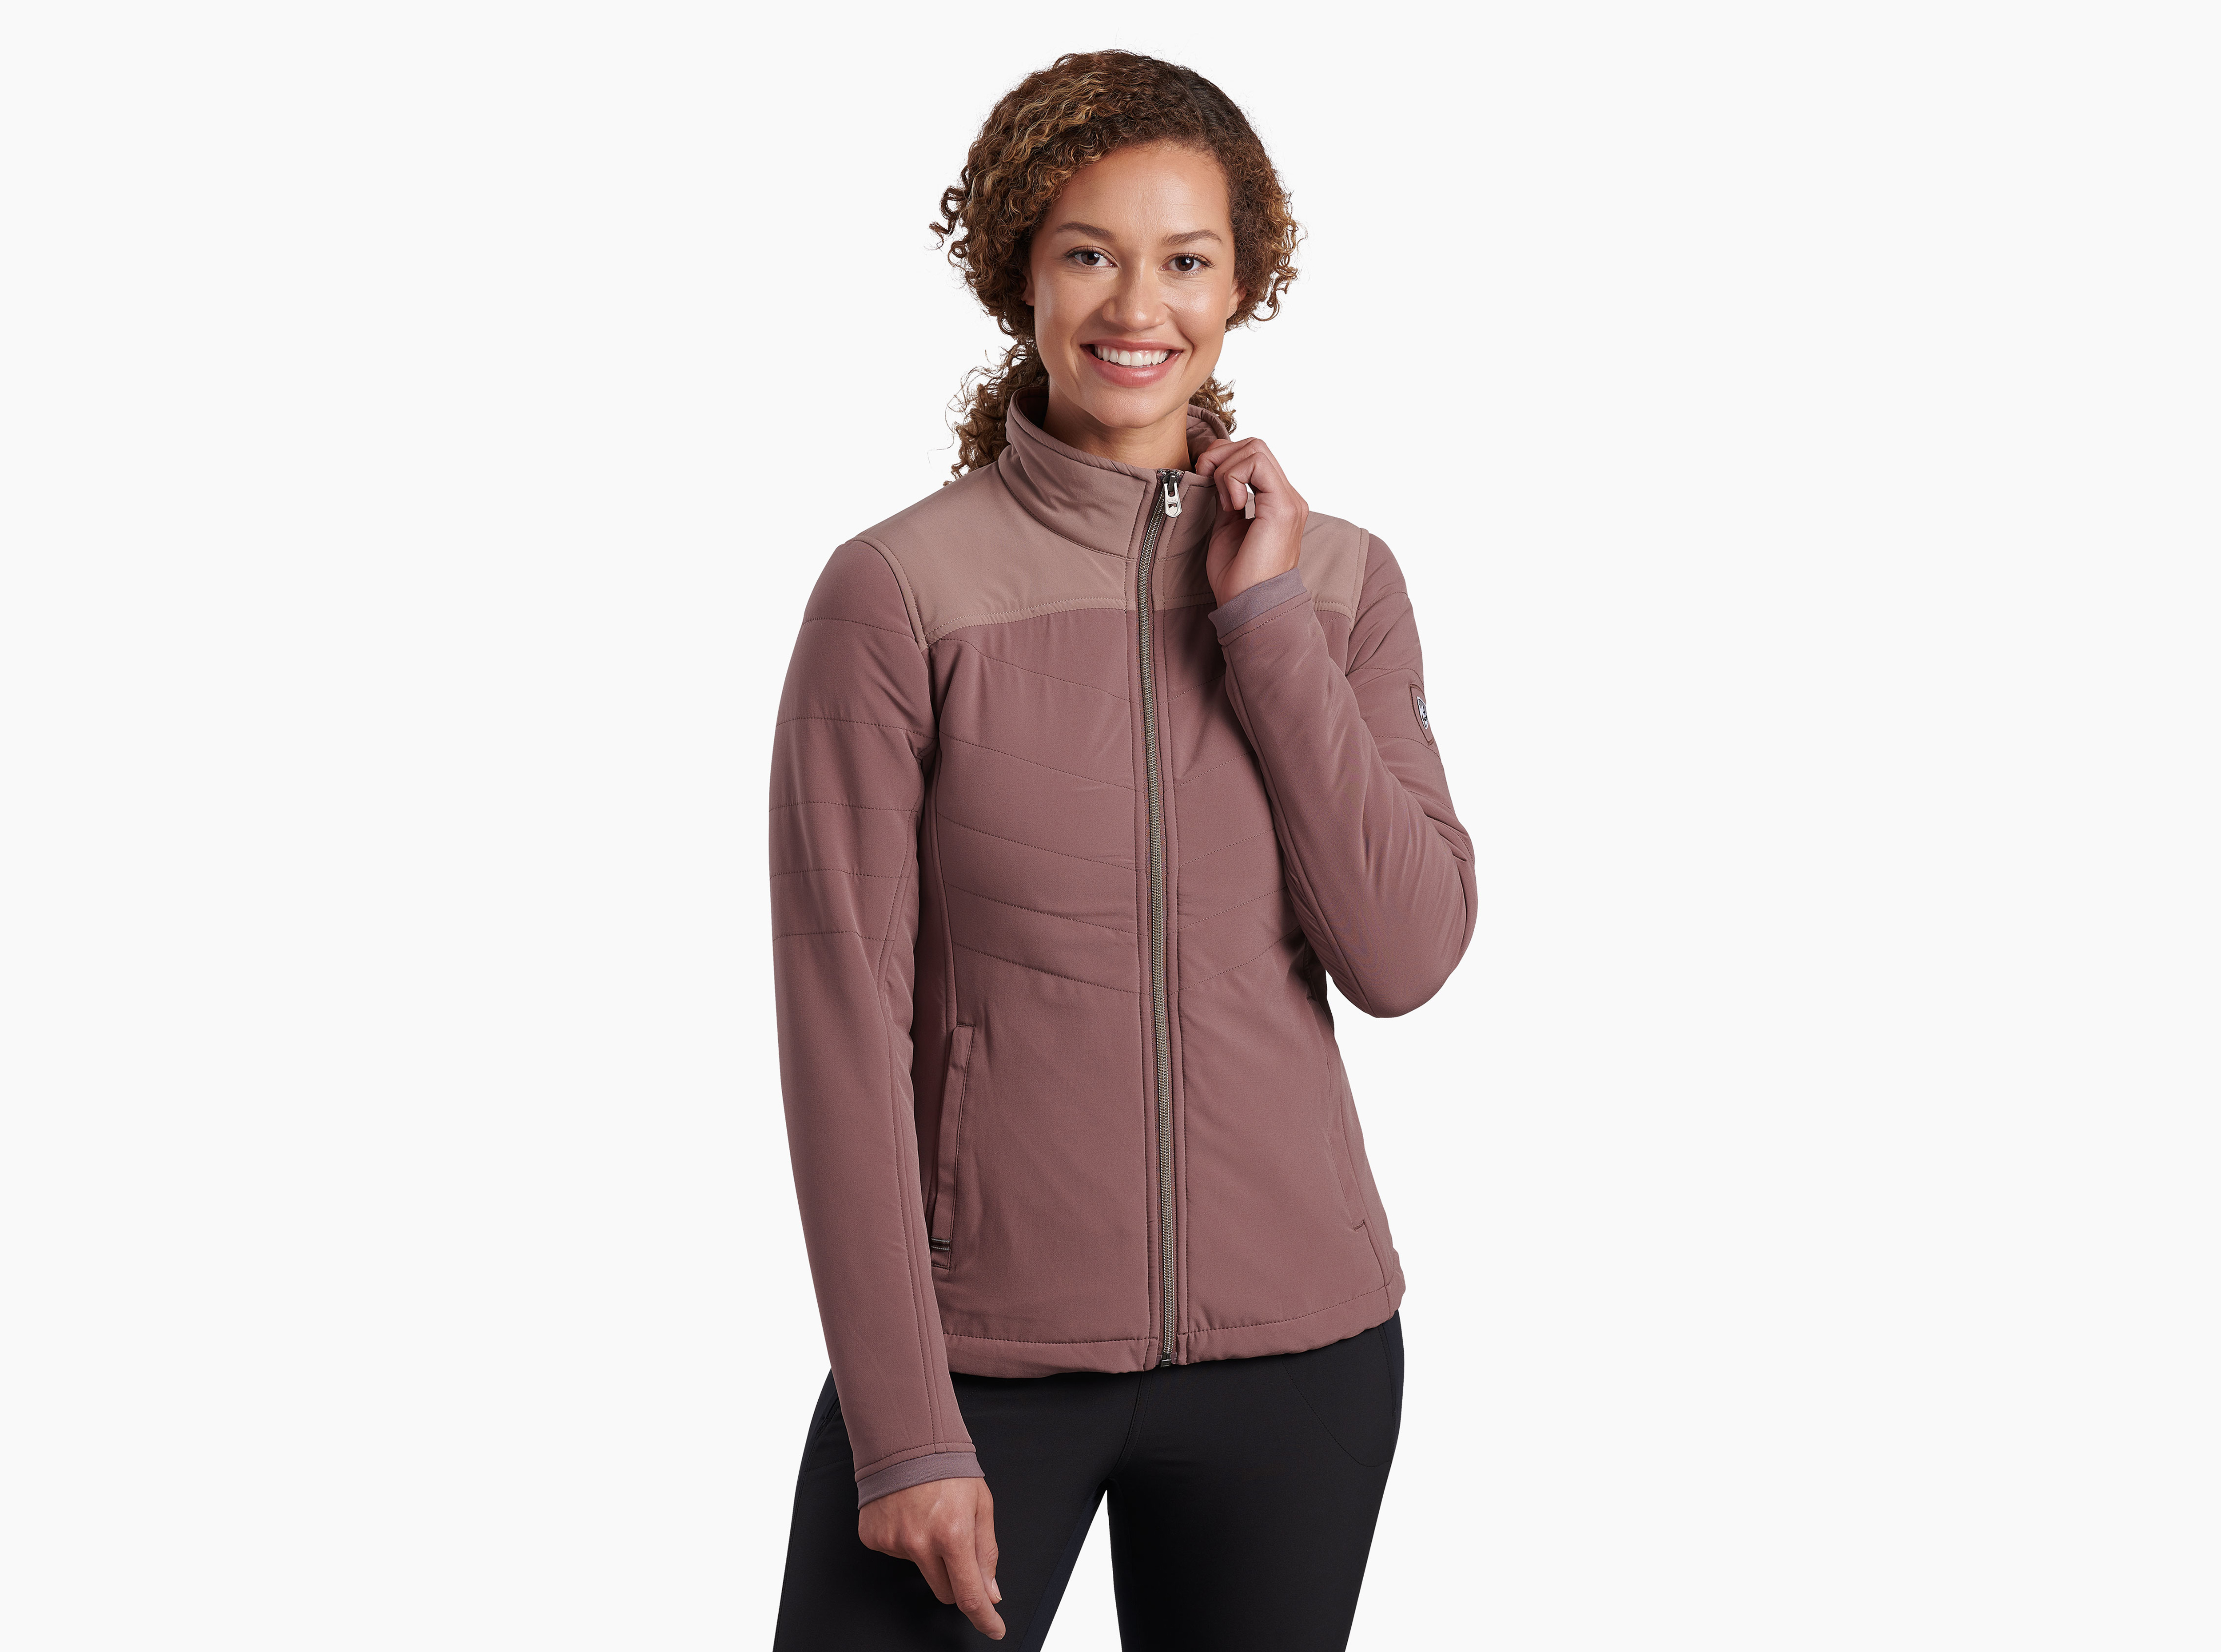 KUHL women's Spyrit hip length soft fleece hood jacket in Natural